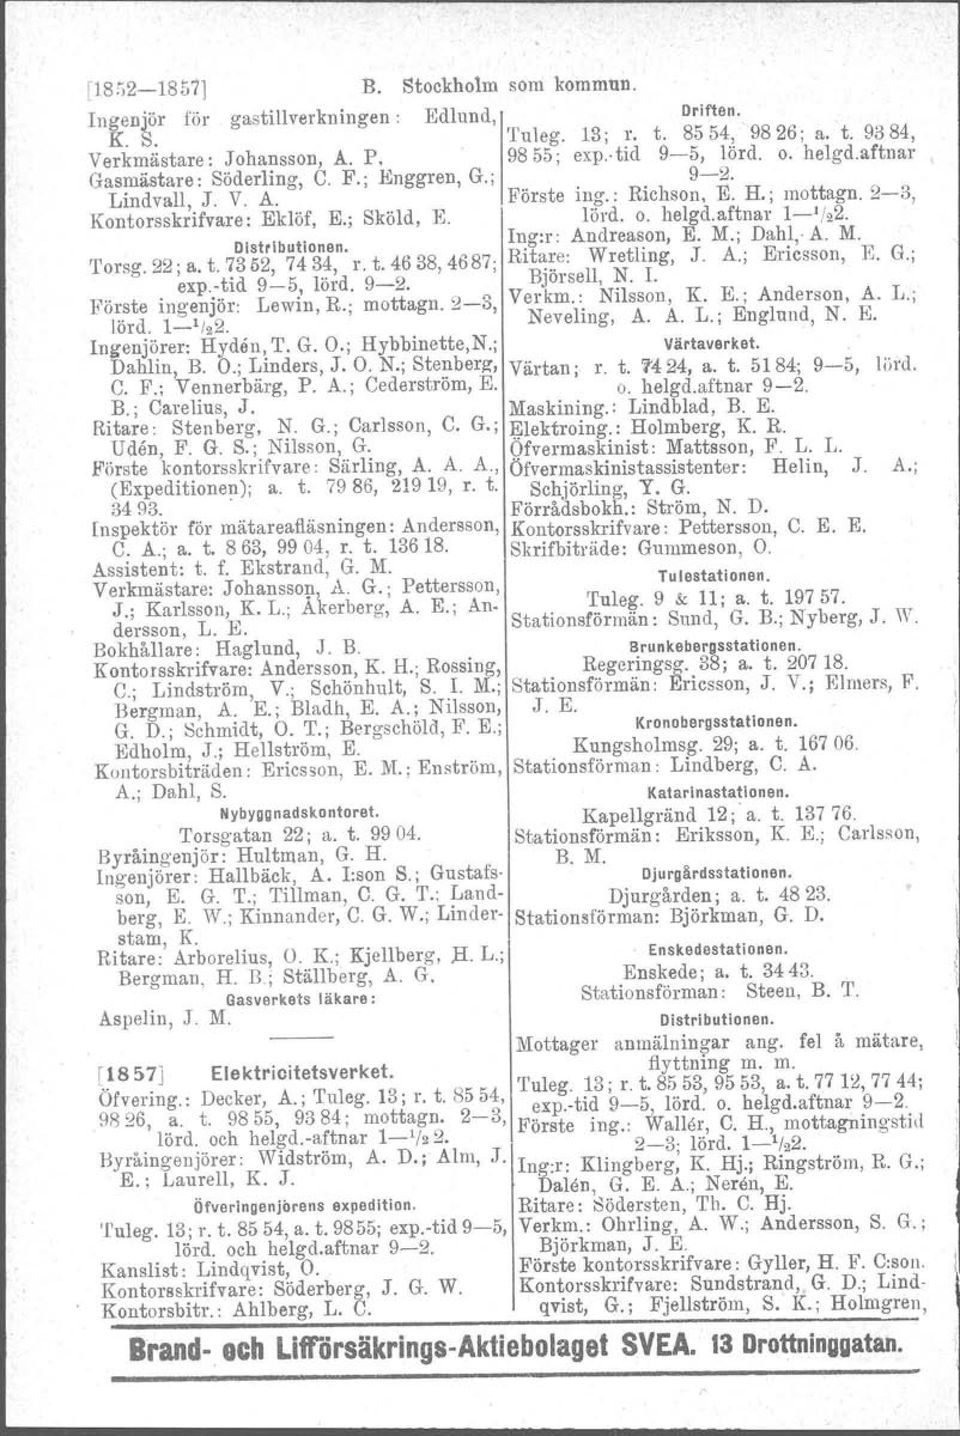 Distributionen. Ing:r: Andreason, E. M.; Dahl,' A. M. 'I'orsg. 22; a. t. 73 52, 7434, r. t. 46 38, 4687; Ritare: Wretling, J. A.; Ericsson, E. G.; exp.-tid 9-5, lörd, 9-2. Björsell, N.